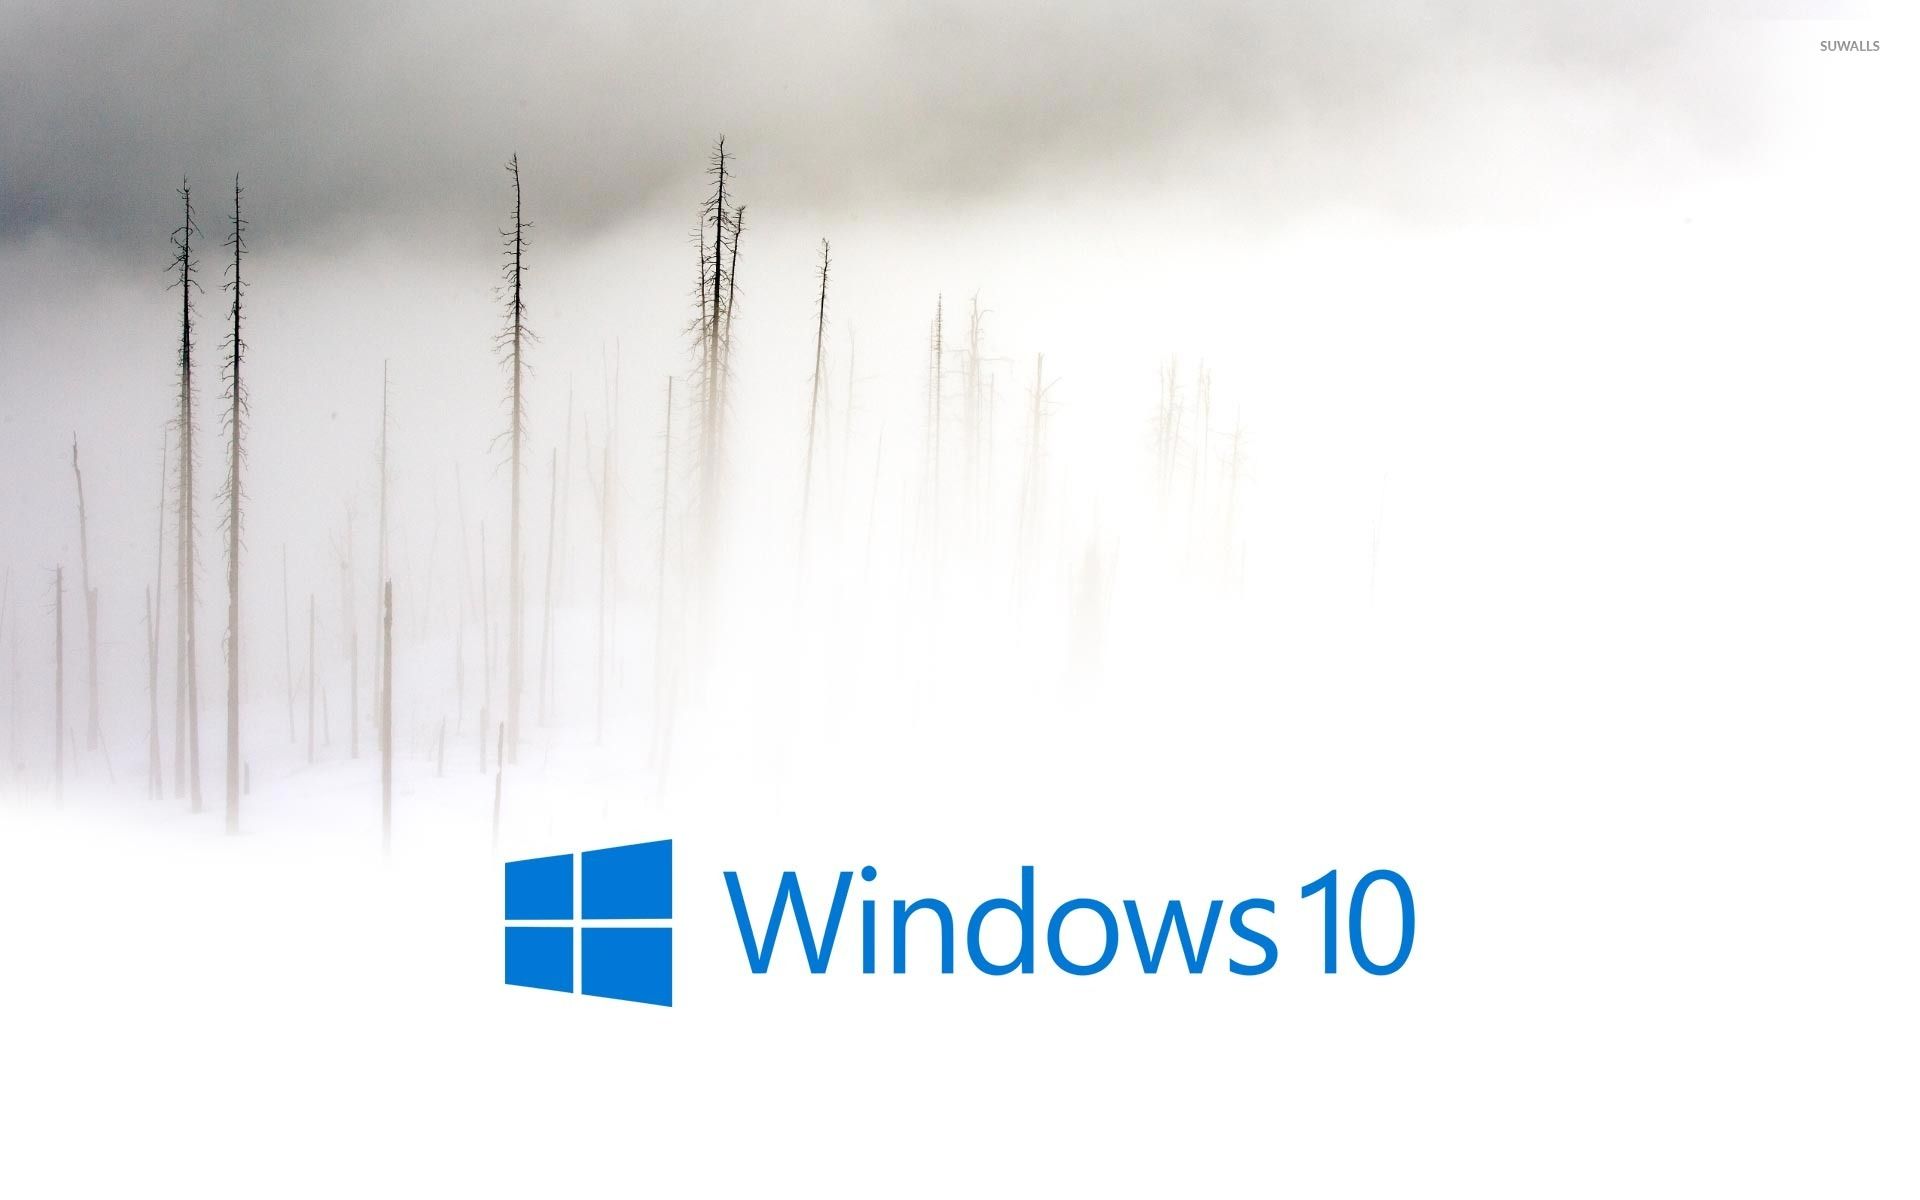 Windows 10 in the foggy winter day blue text logo wallpaper wallpaper